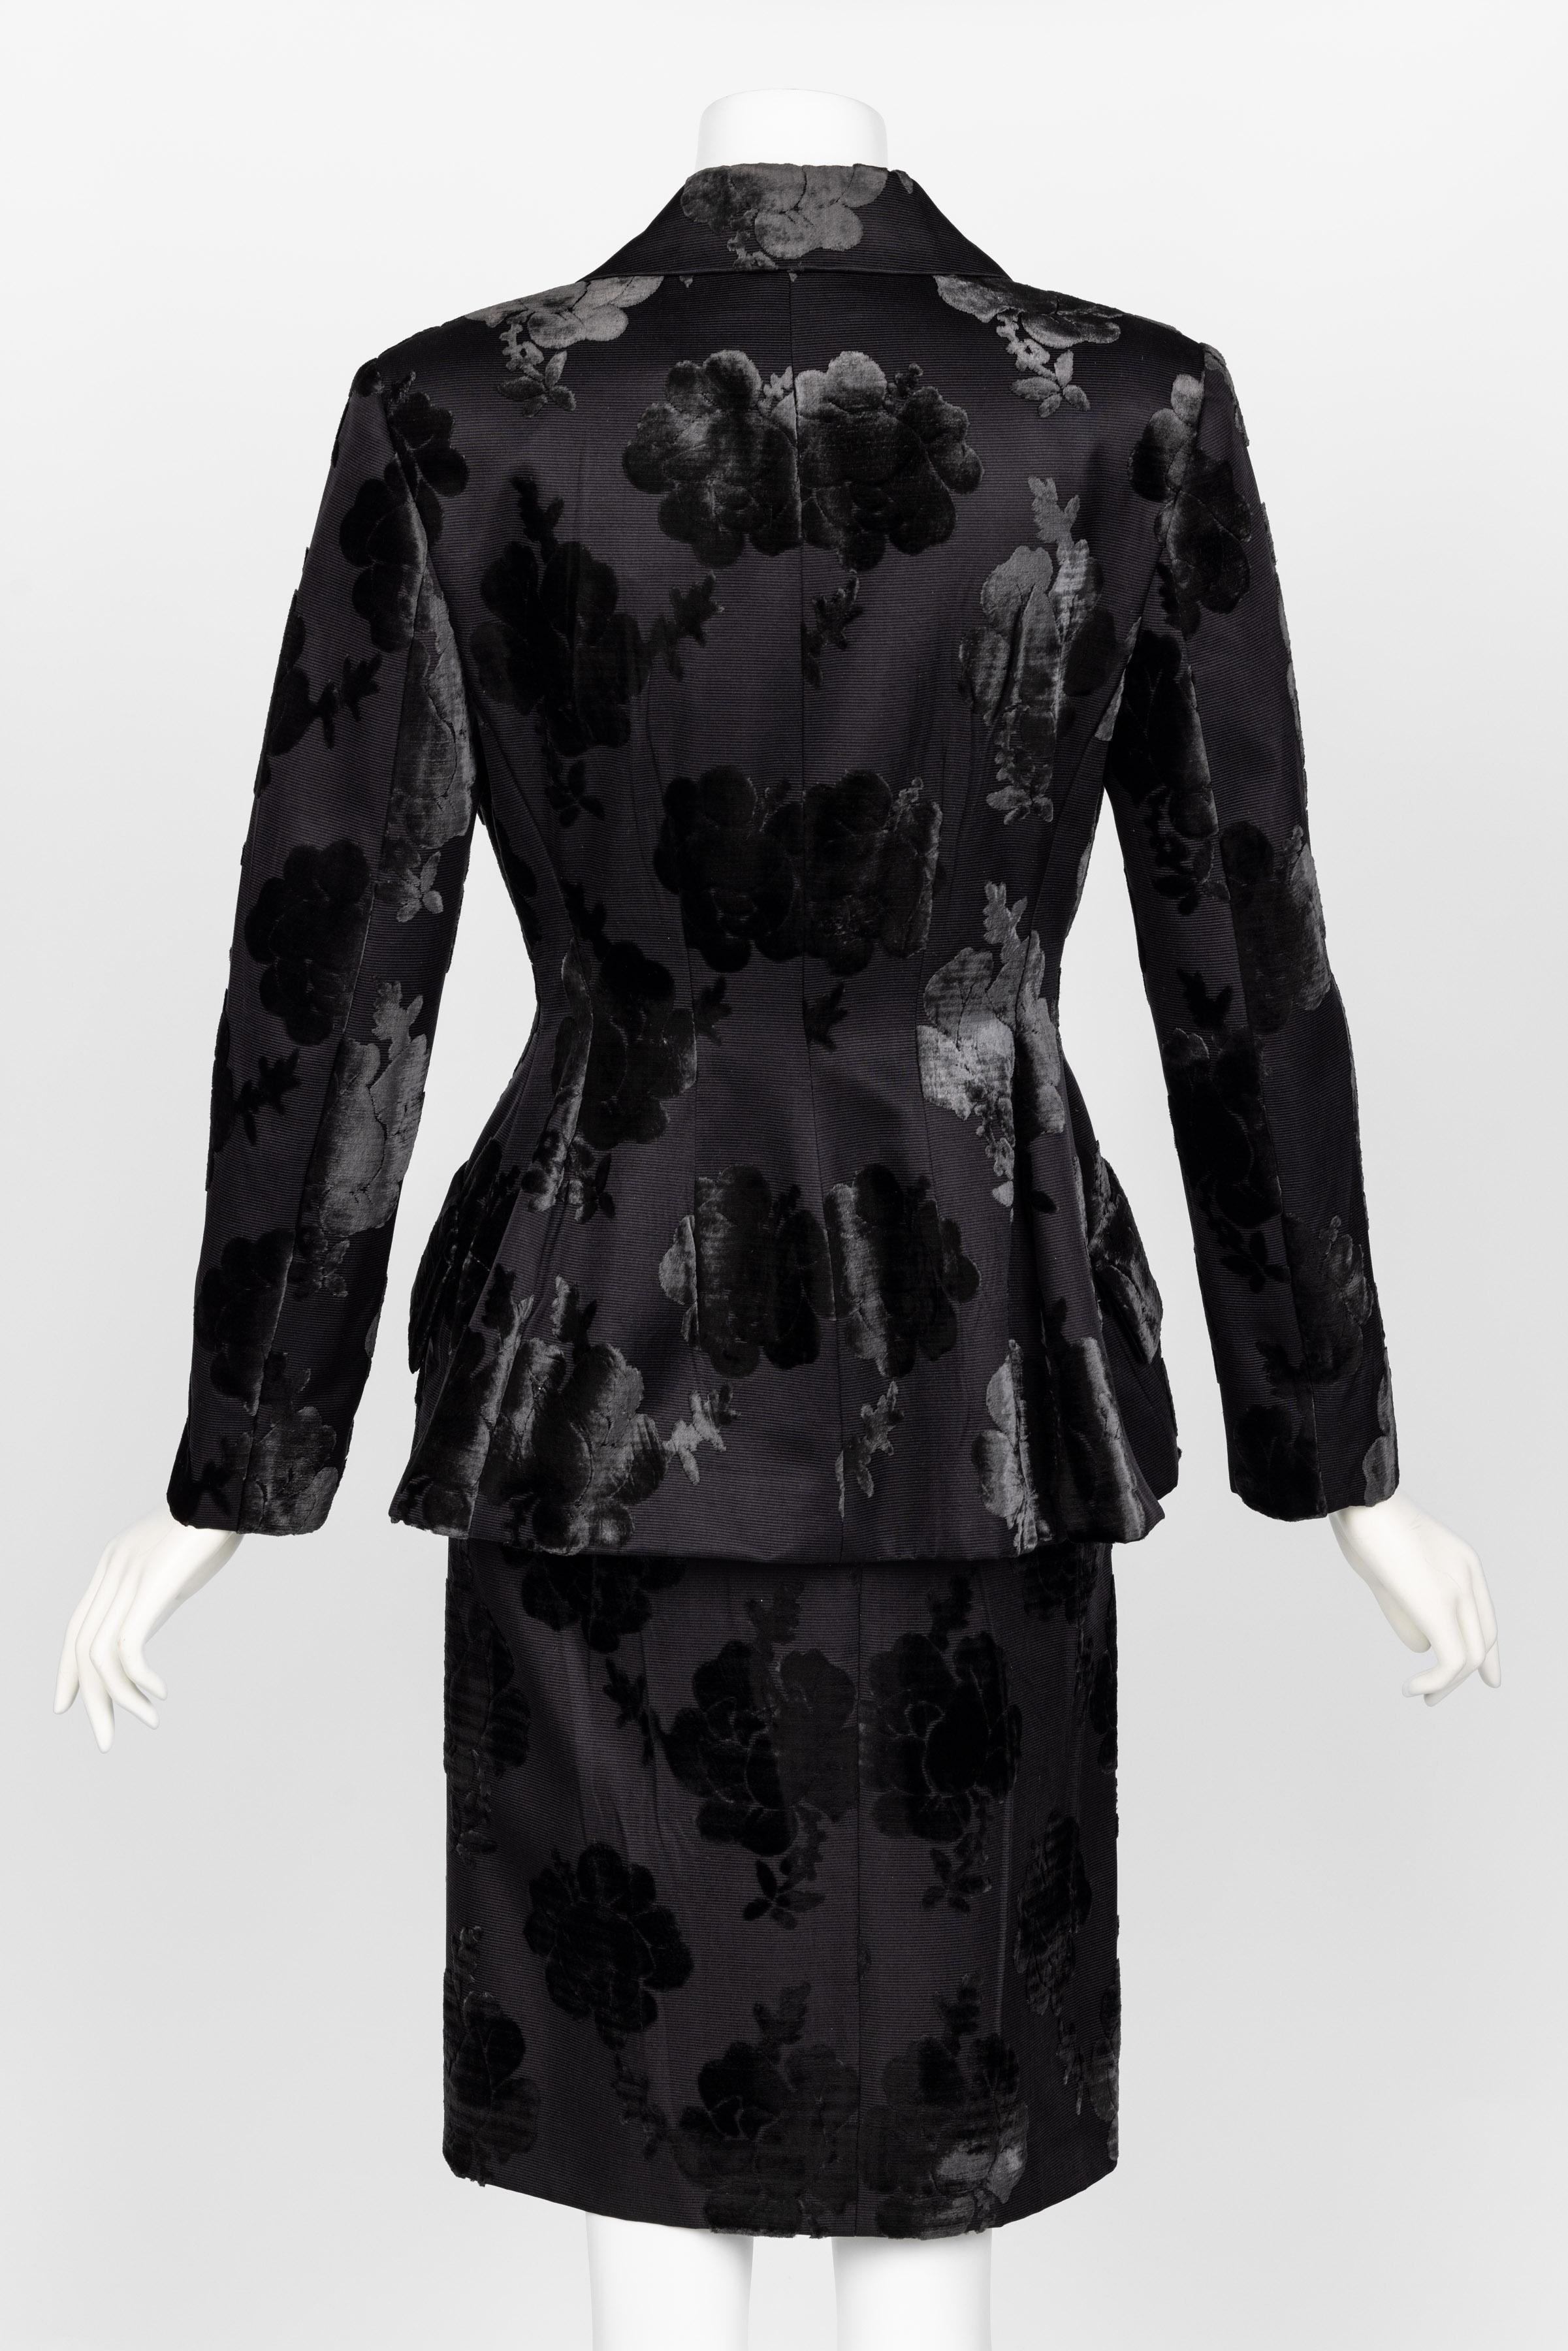 Prada F/W 2009 Runway Black Silk Velvet Floral Skirt Suit New W/Tags For Sale 1